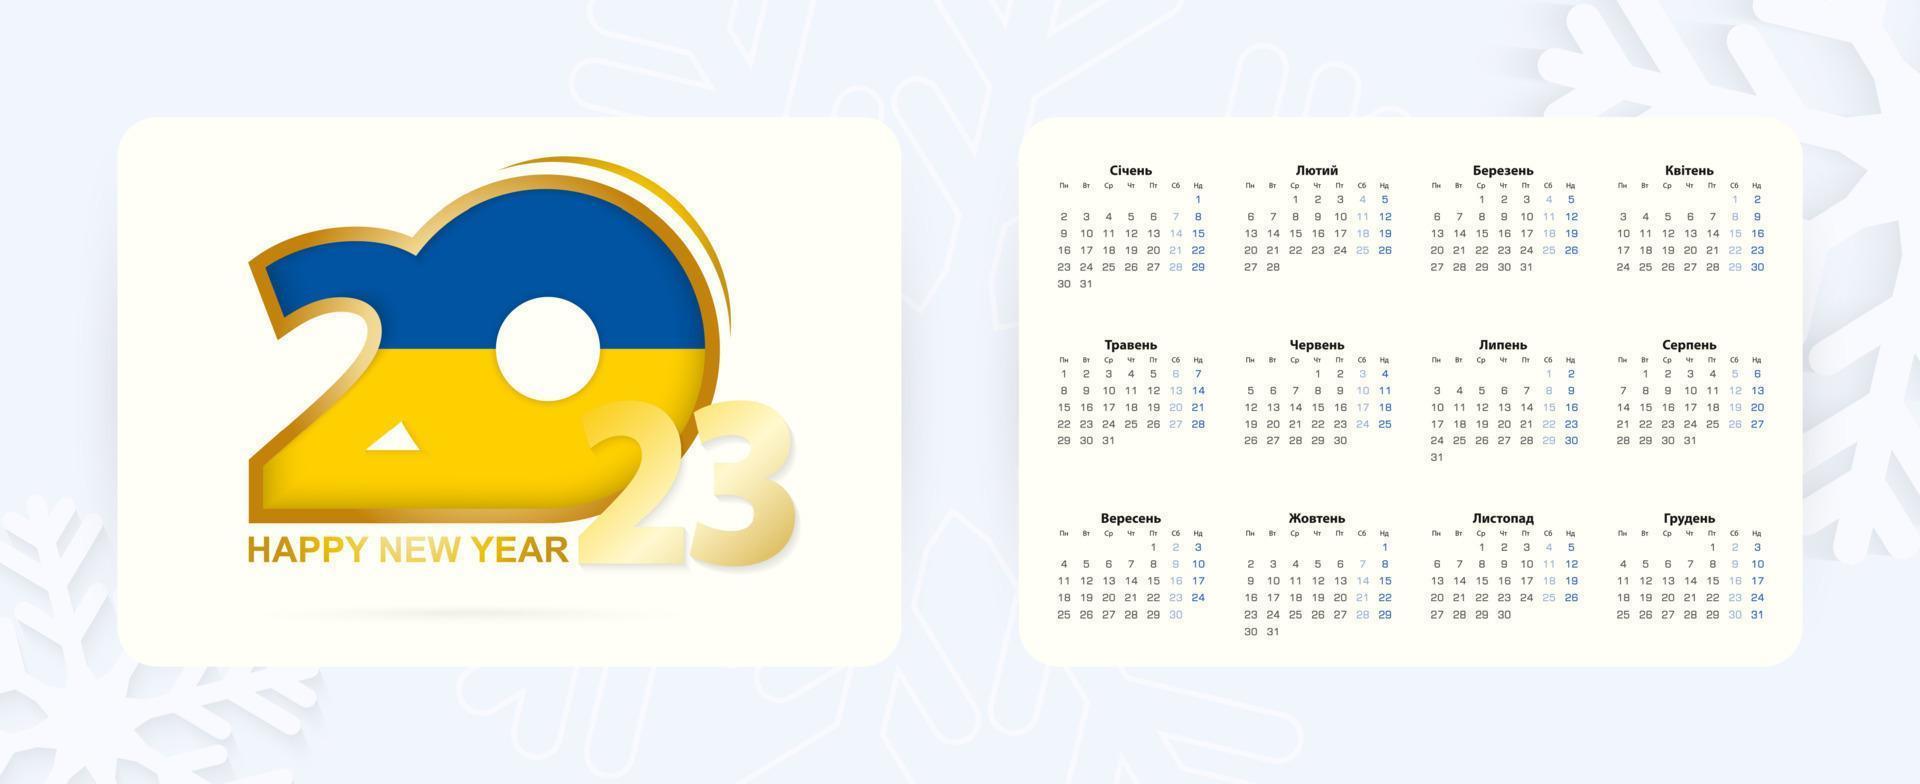 Horizontal Pocket Calendar 2023 in Ukrainian language. New Year 2023 icon with flag of Ukraine. vector